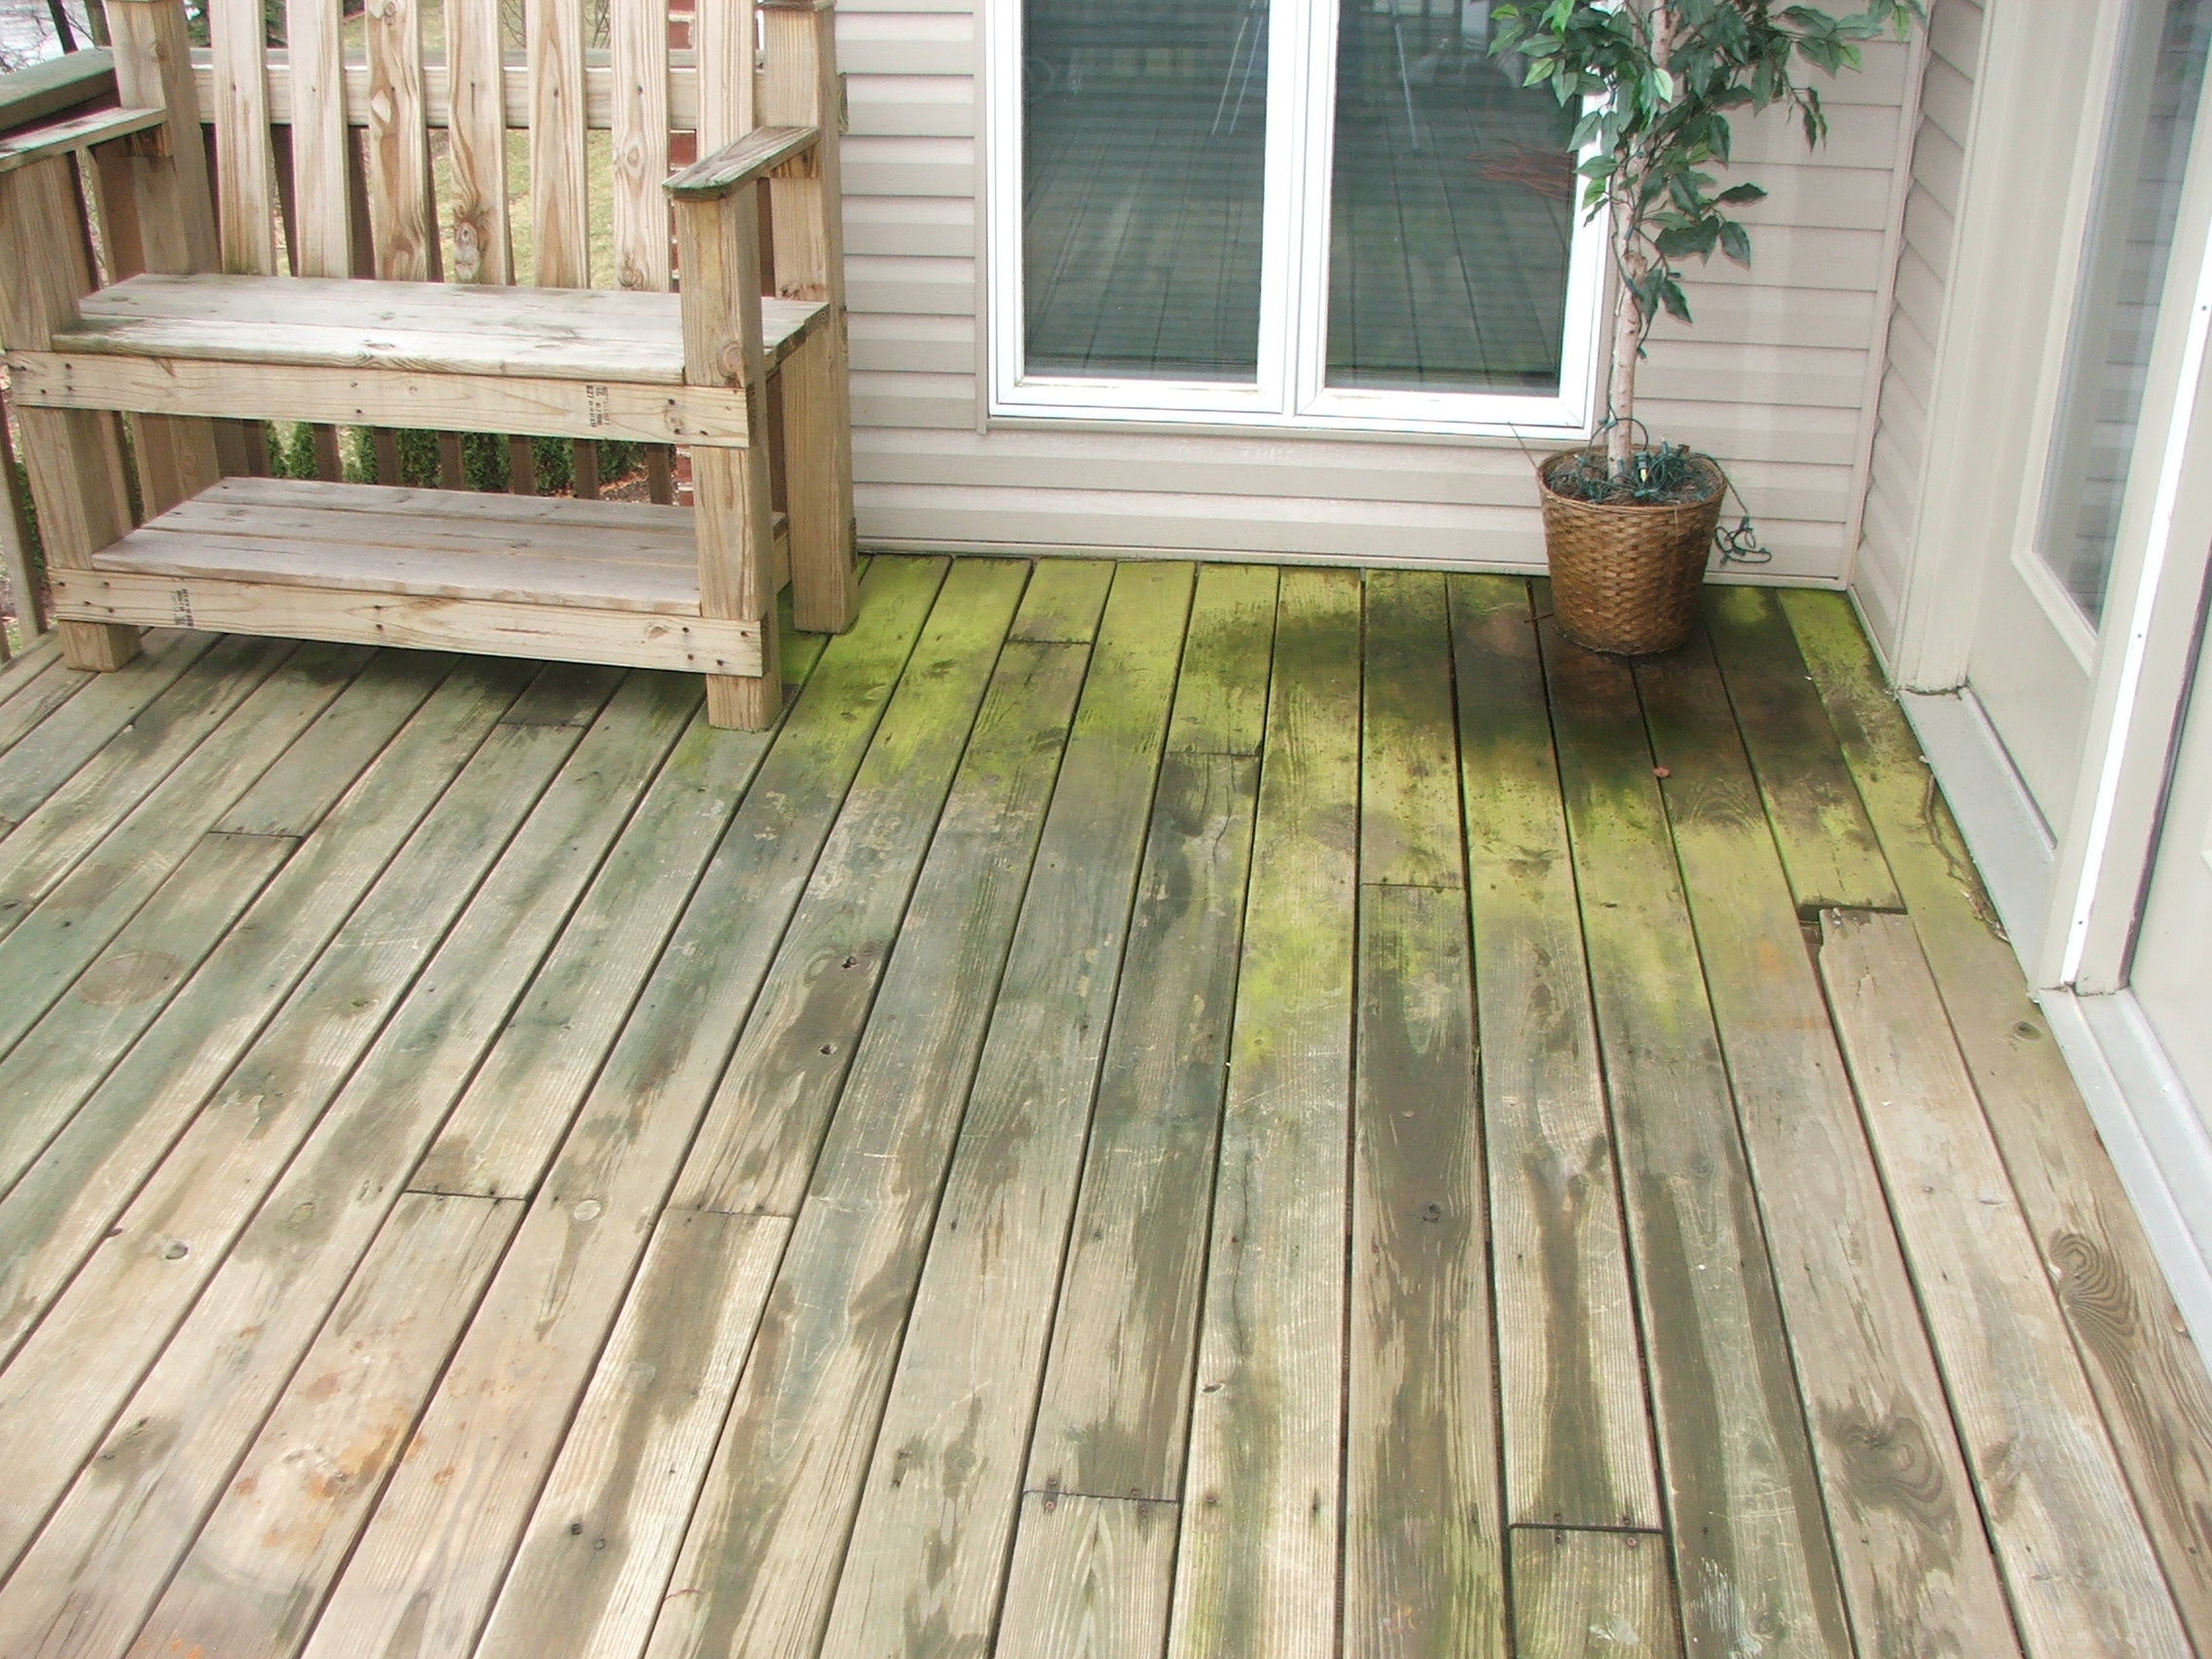 Weather, dirty, green-algae covered wood deck.